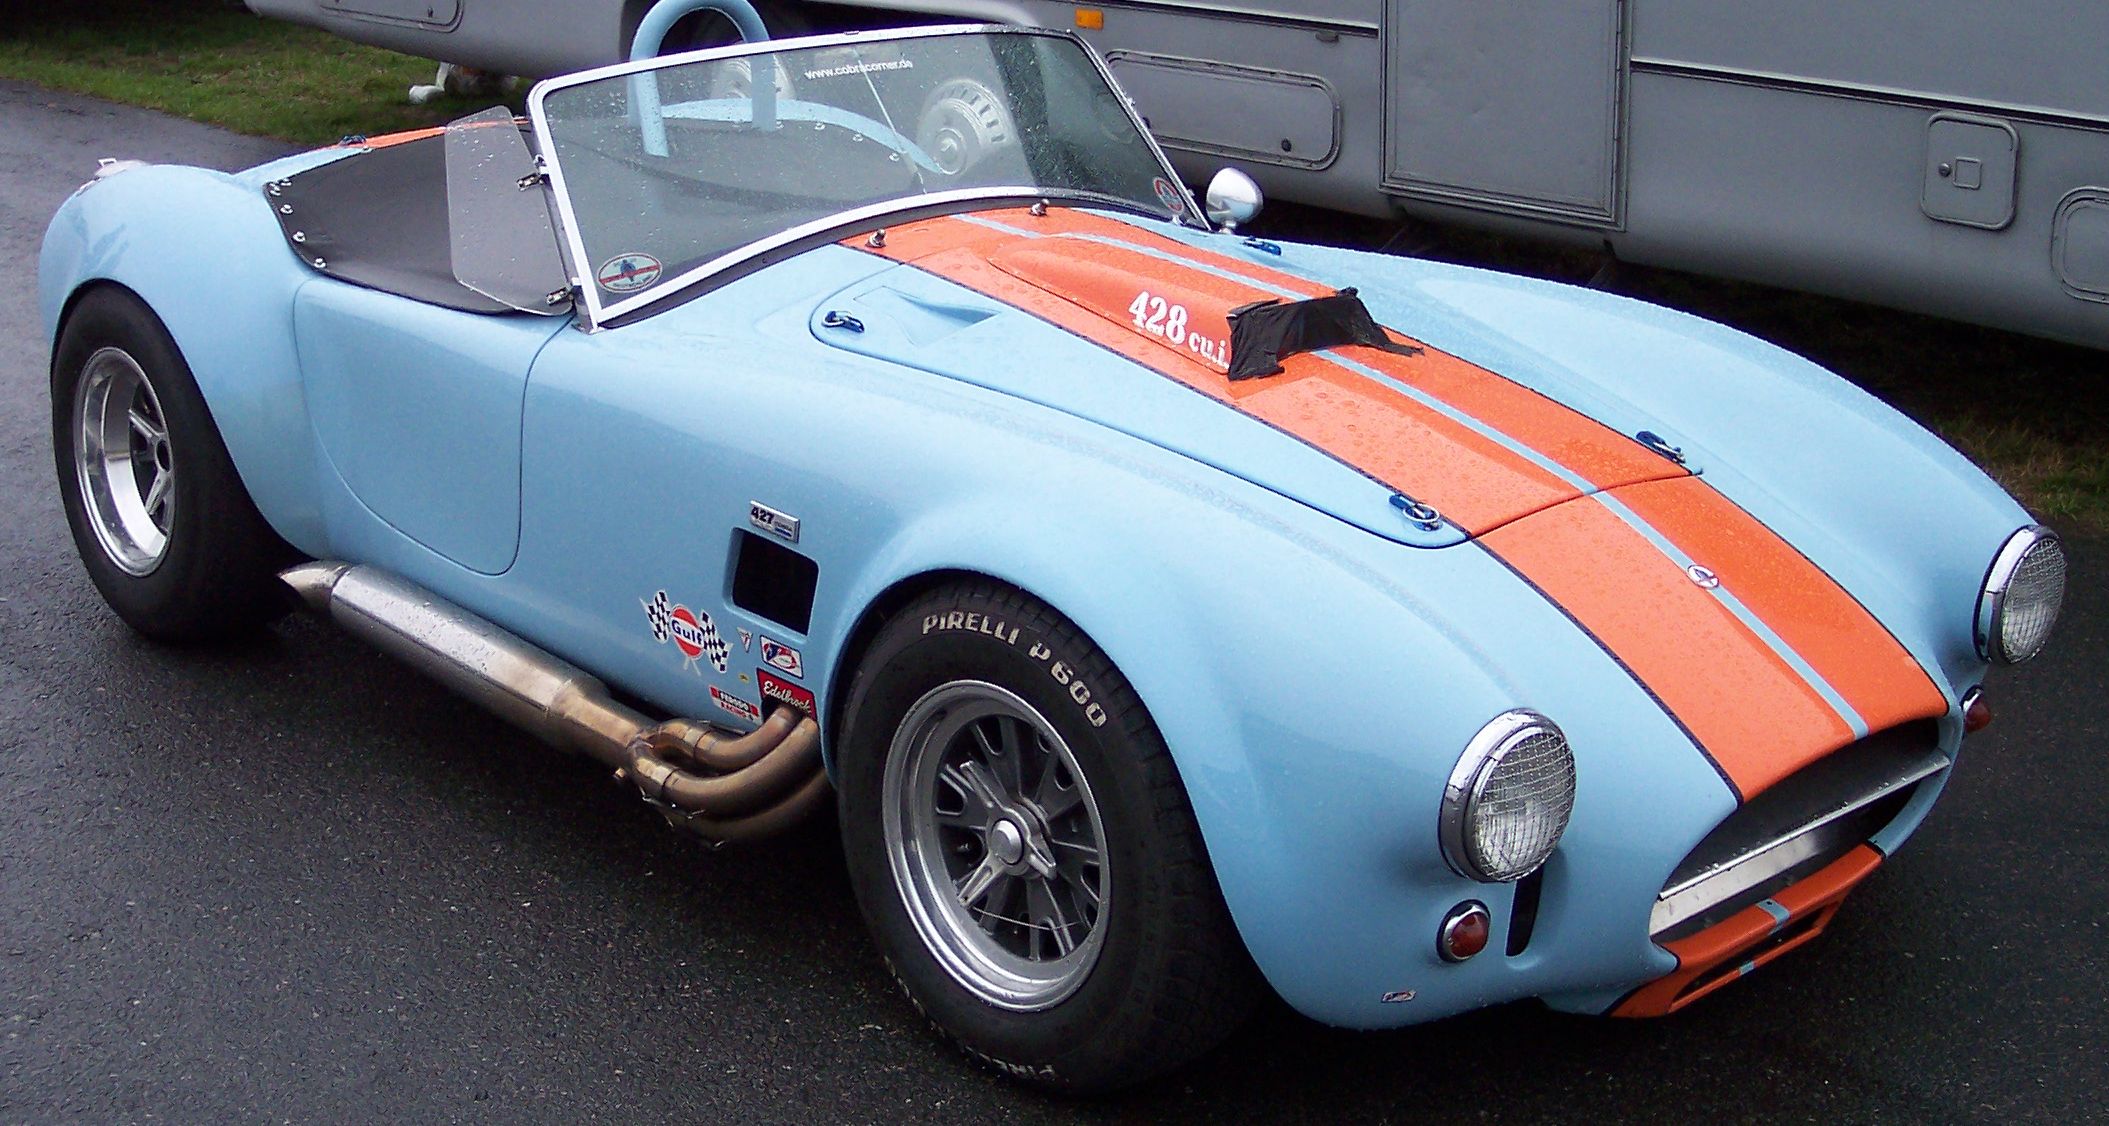 File:Shelby AC 427 Cobra vl blue.jpg - Wikimedia Commons